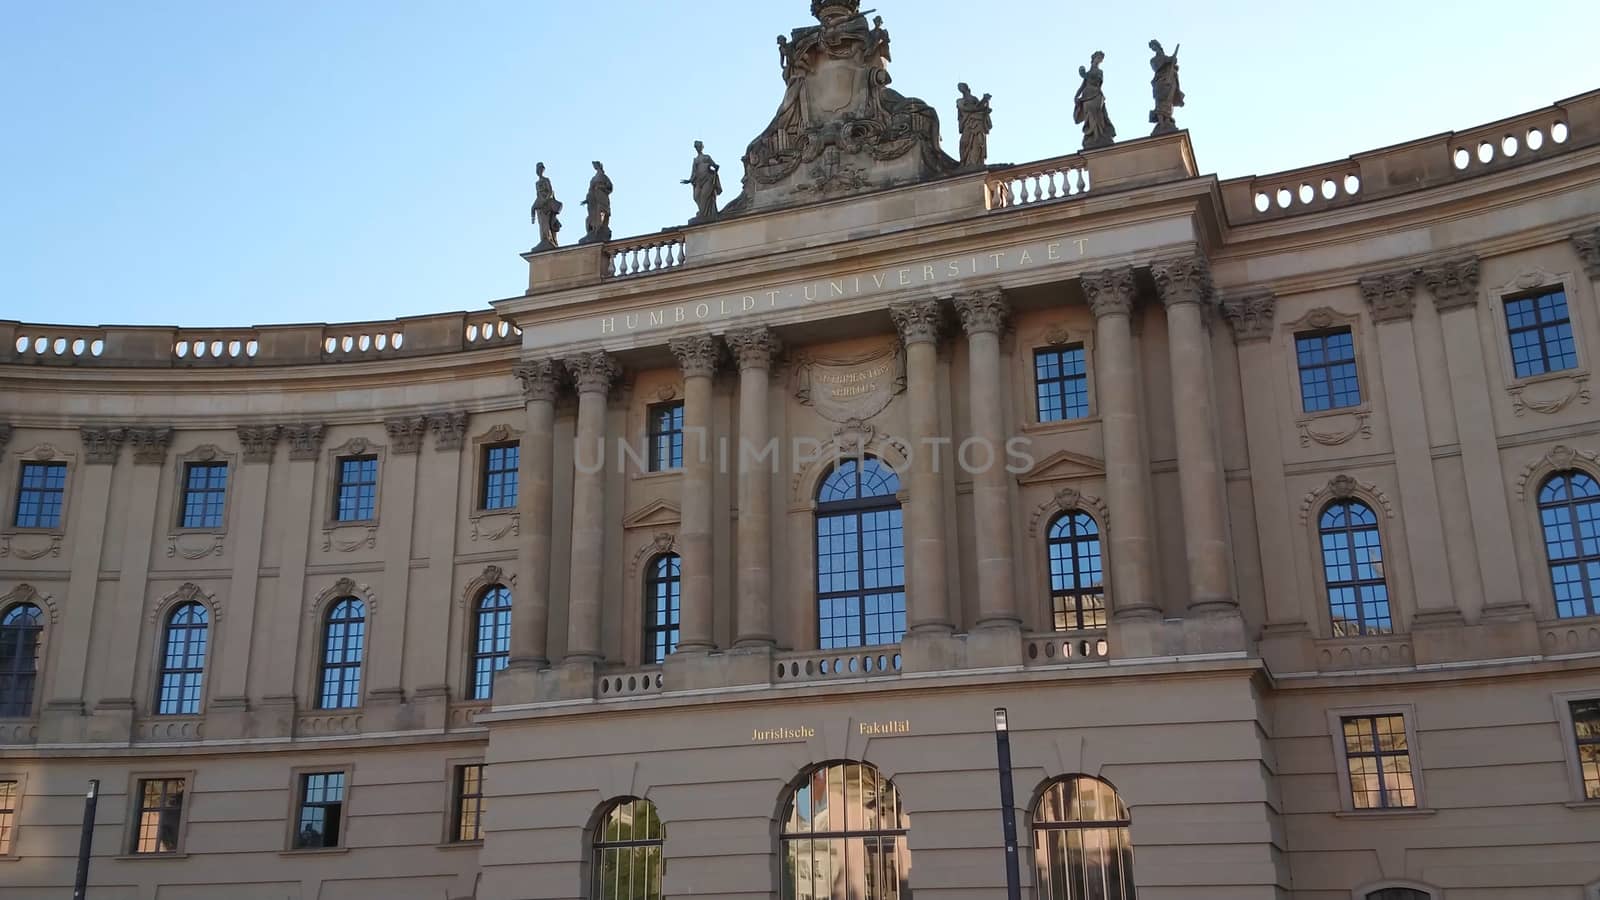 Famous Humboldt University in Berlin - Faculty of Law by Lattwein